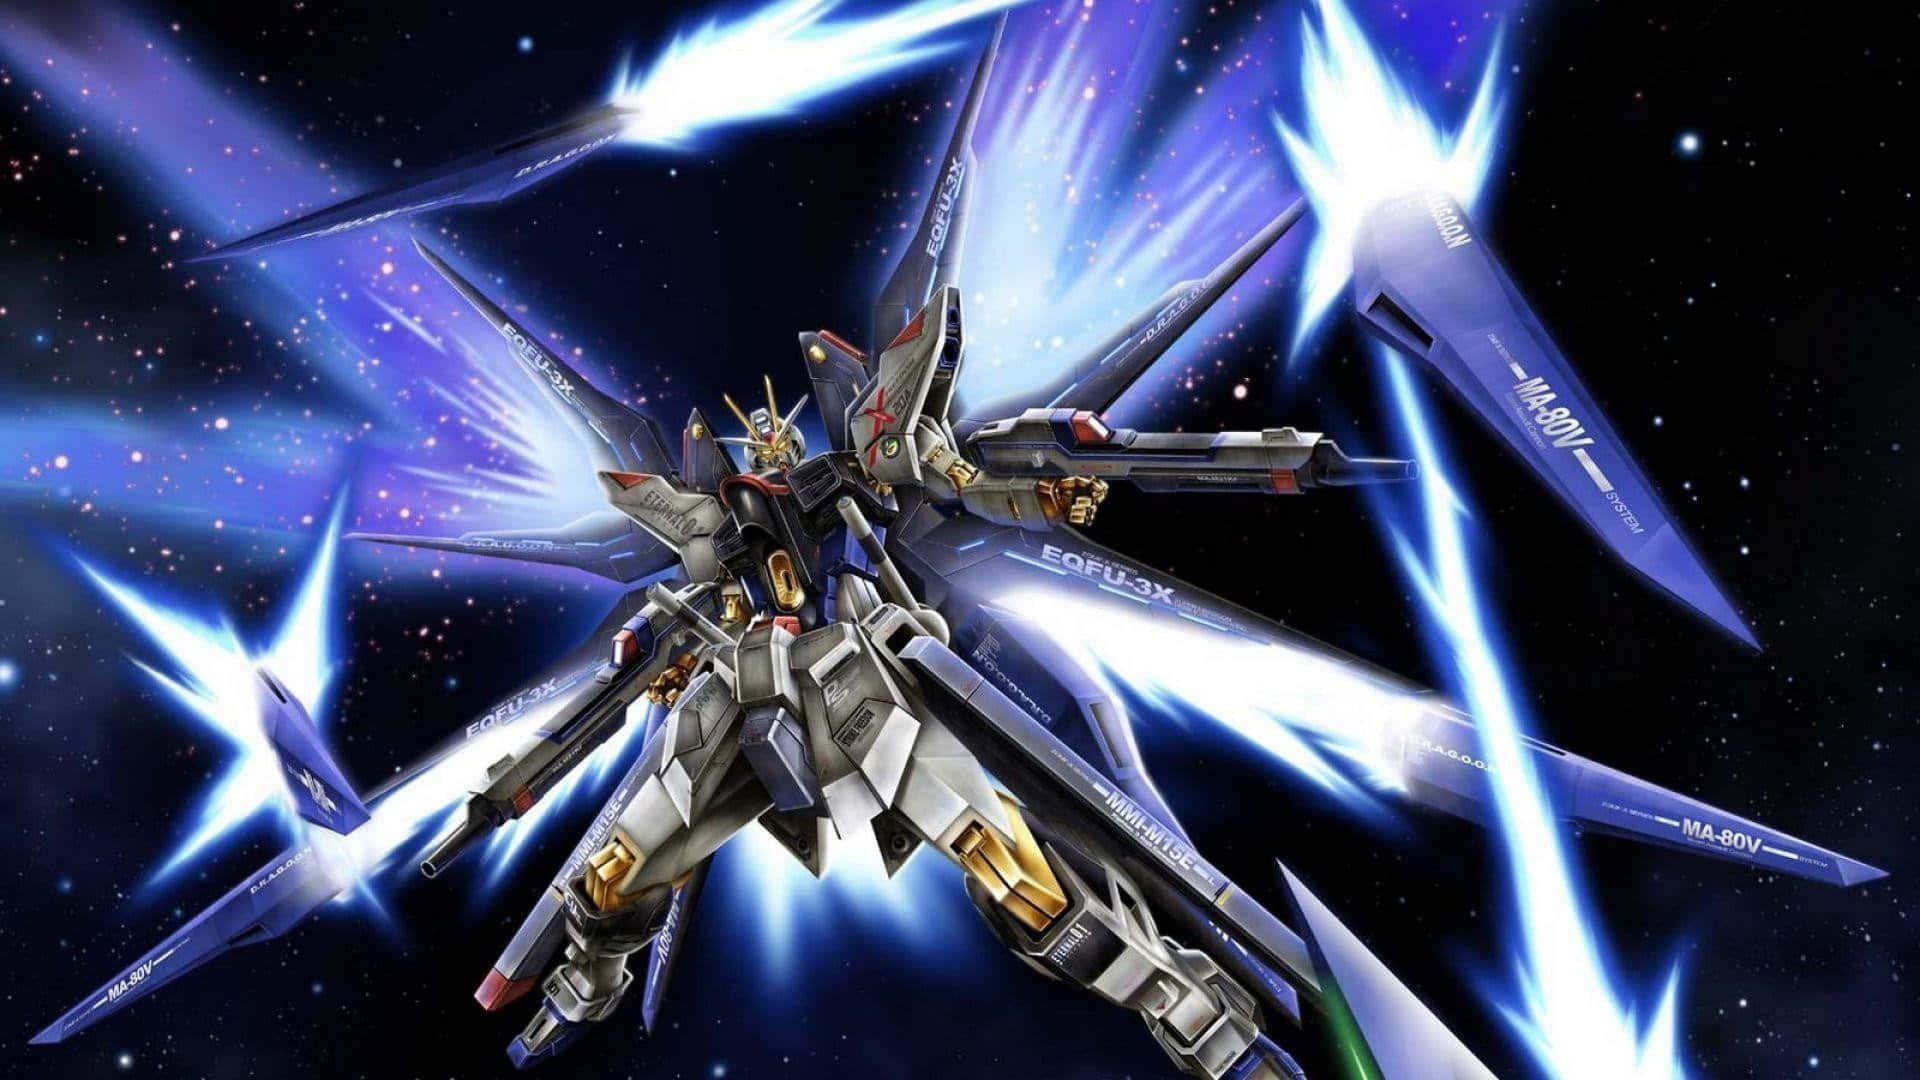 Gundam 00 - A Spaceship With A Blue Light